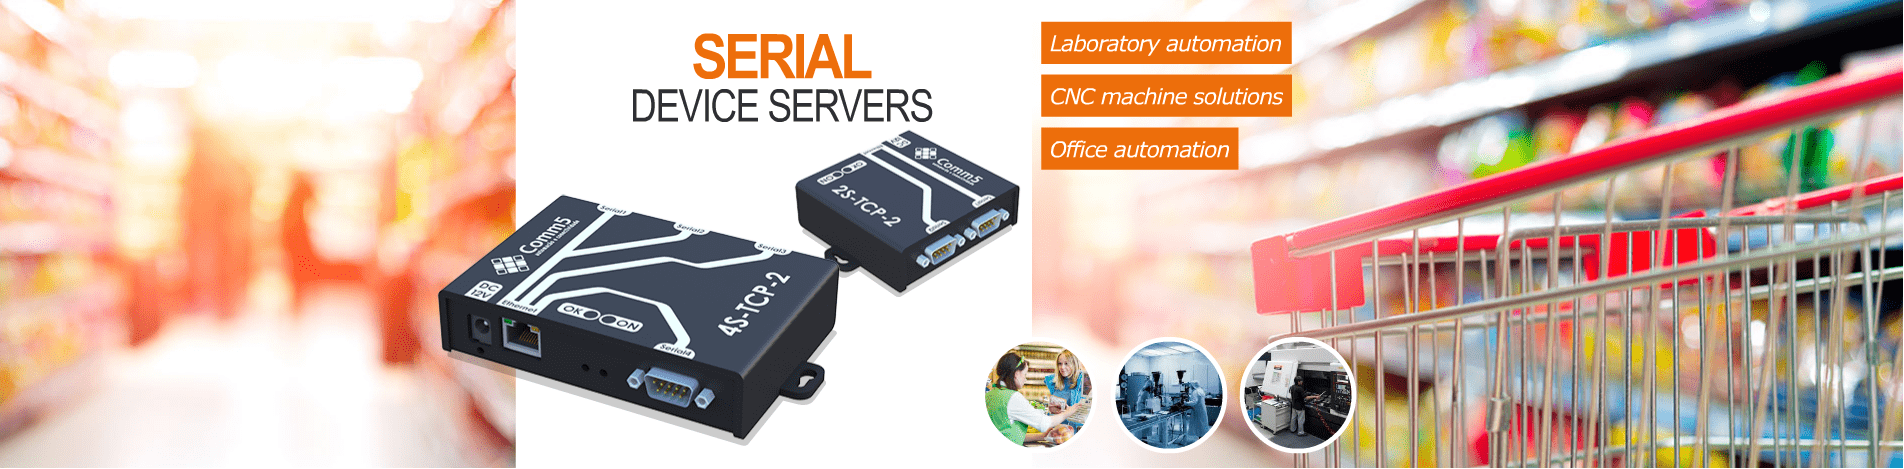 Serial device servers